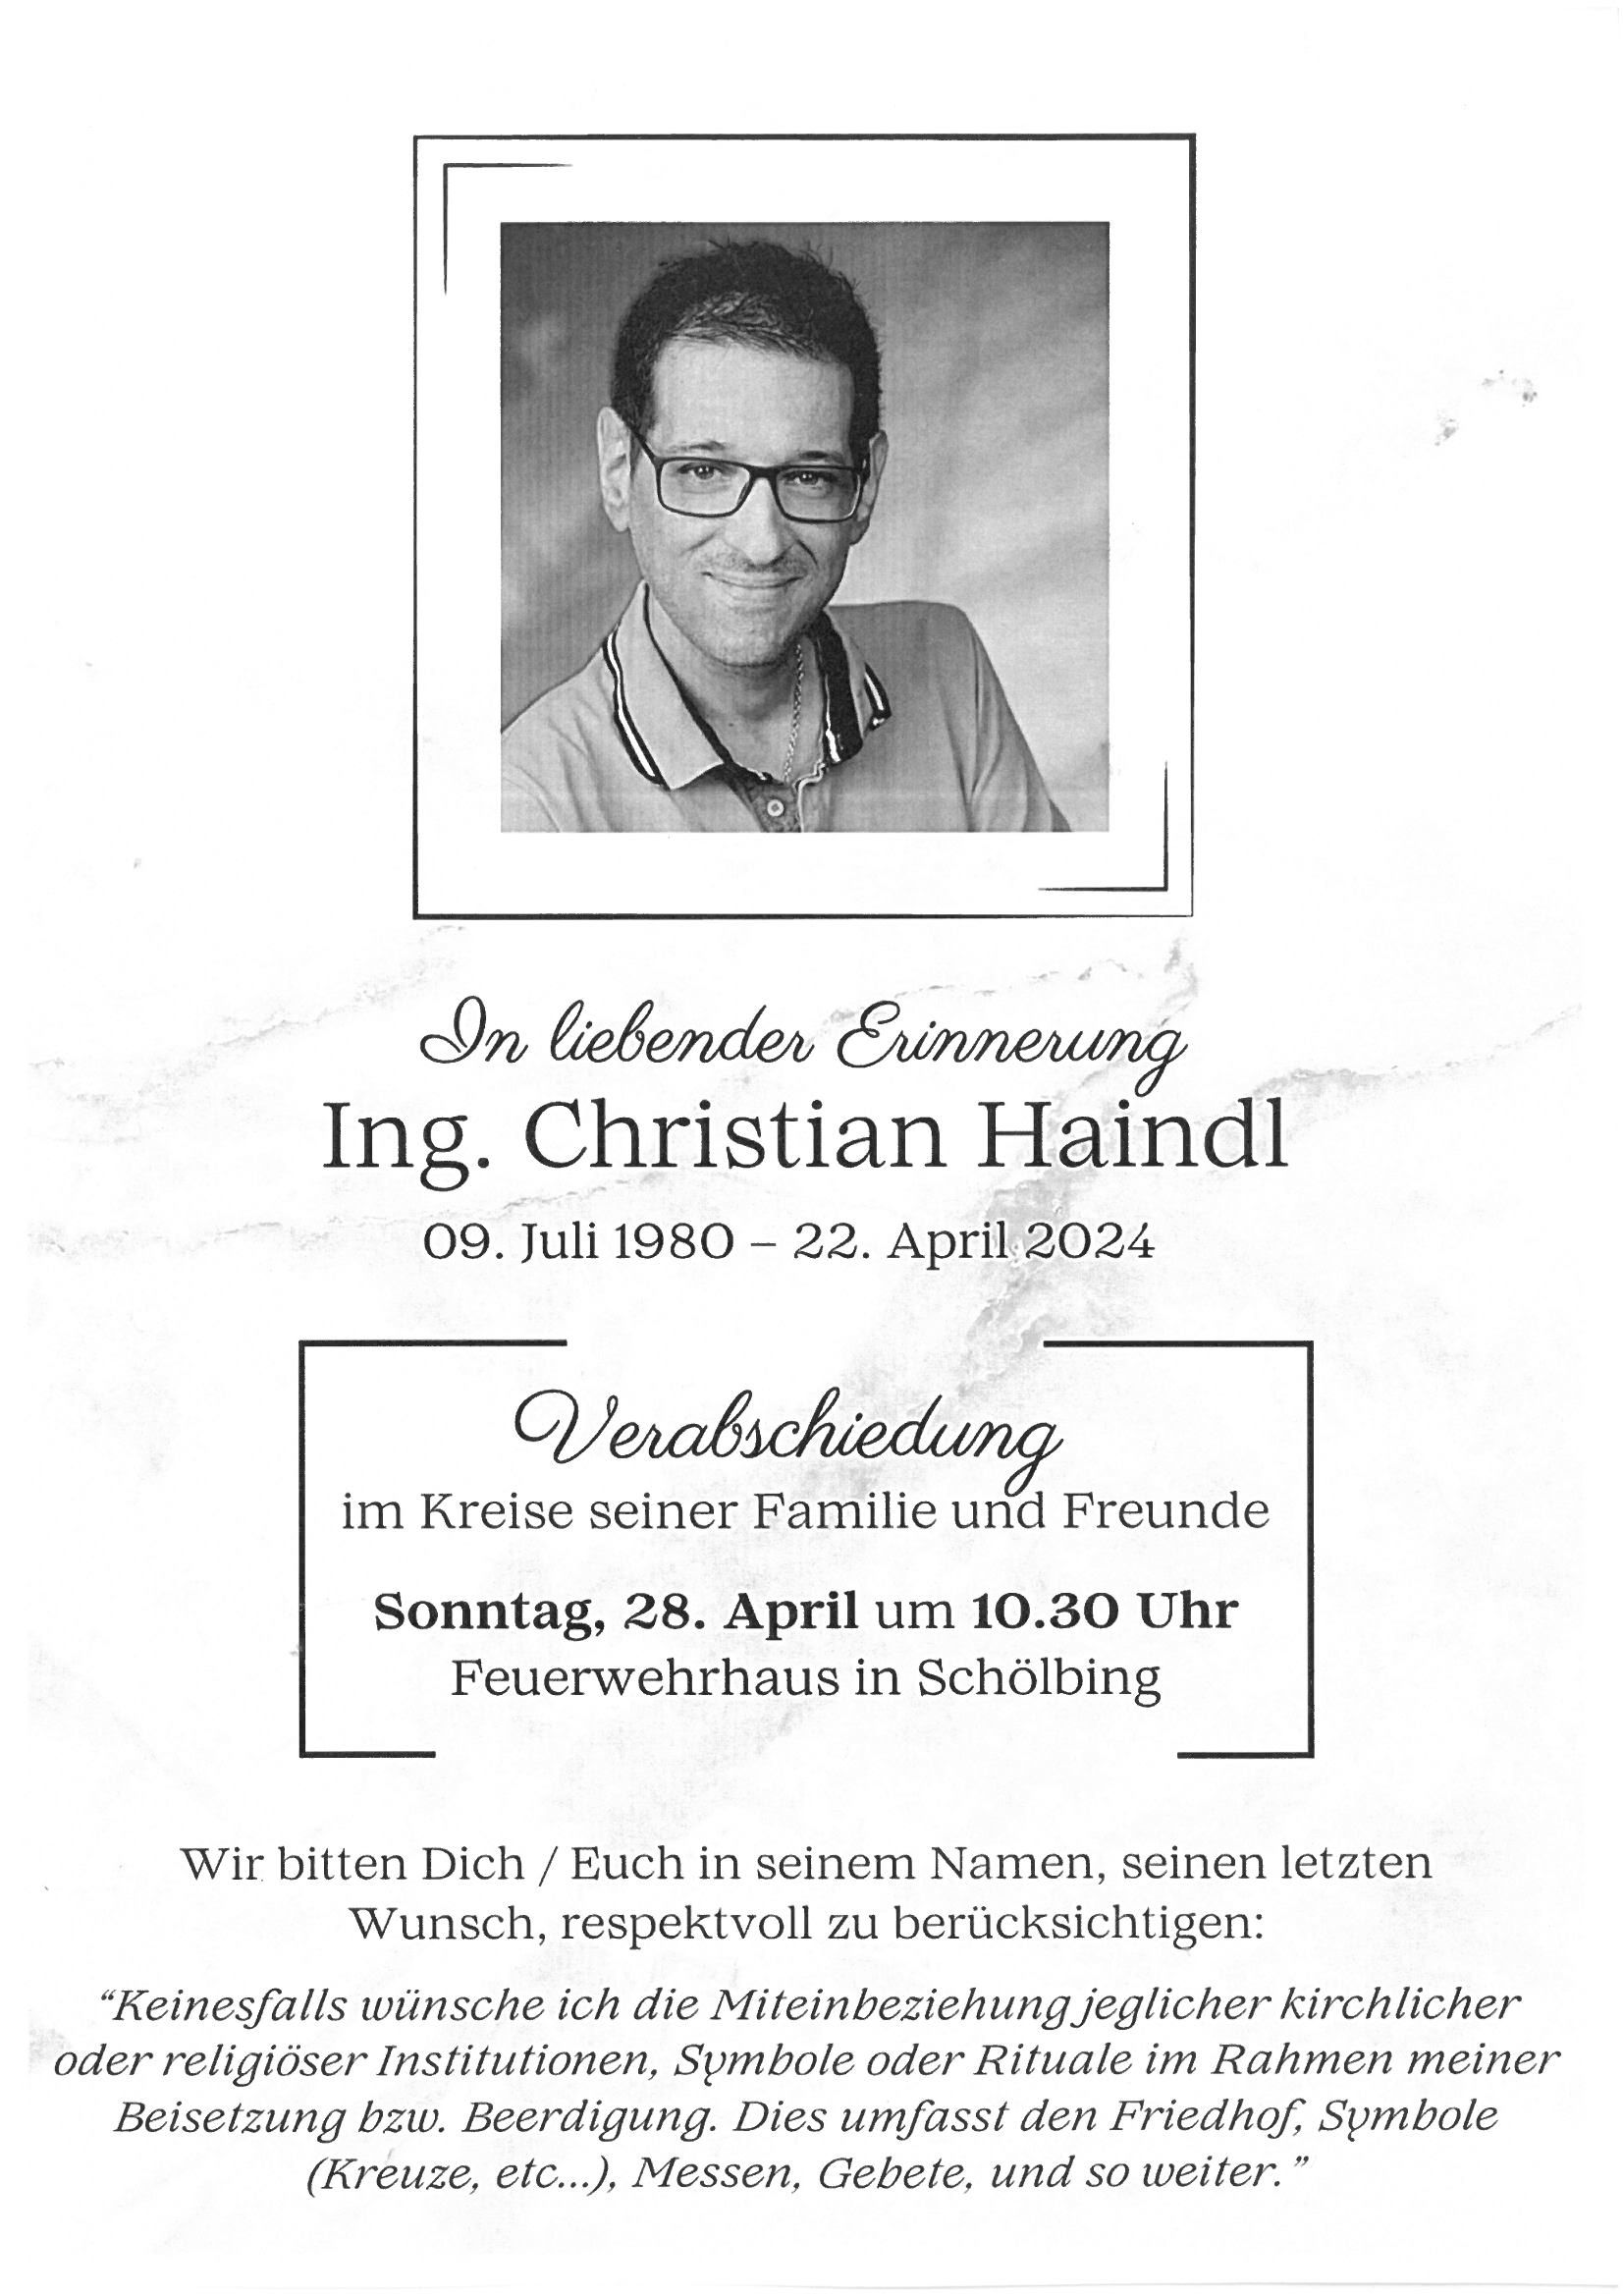 Ing. Christian Haindl, Schölbing